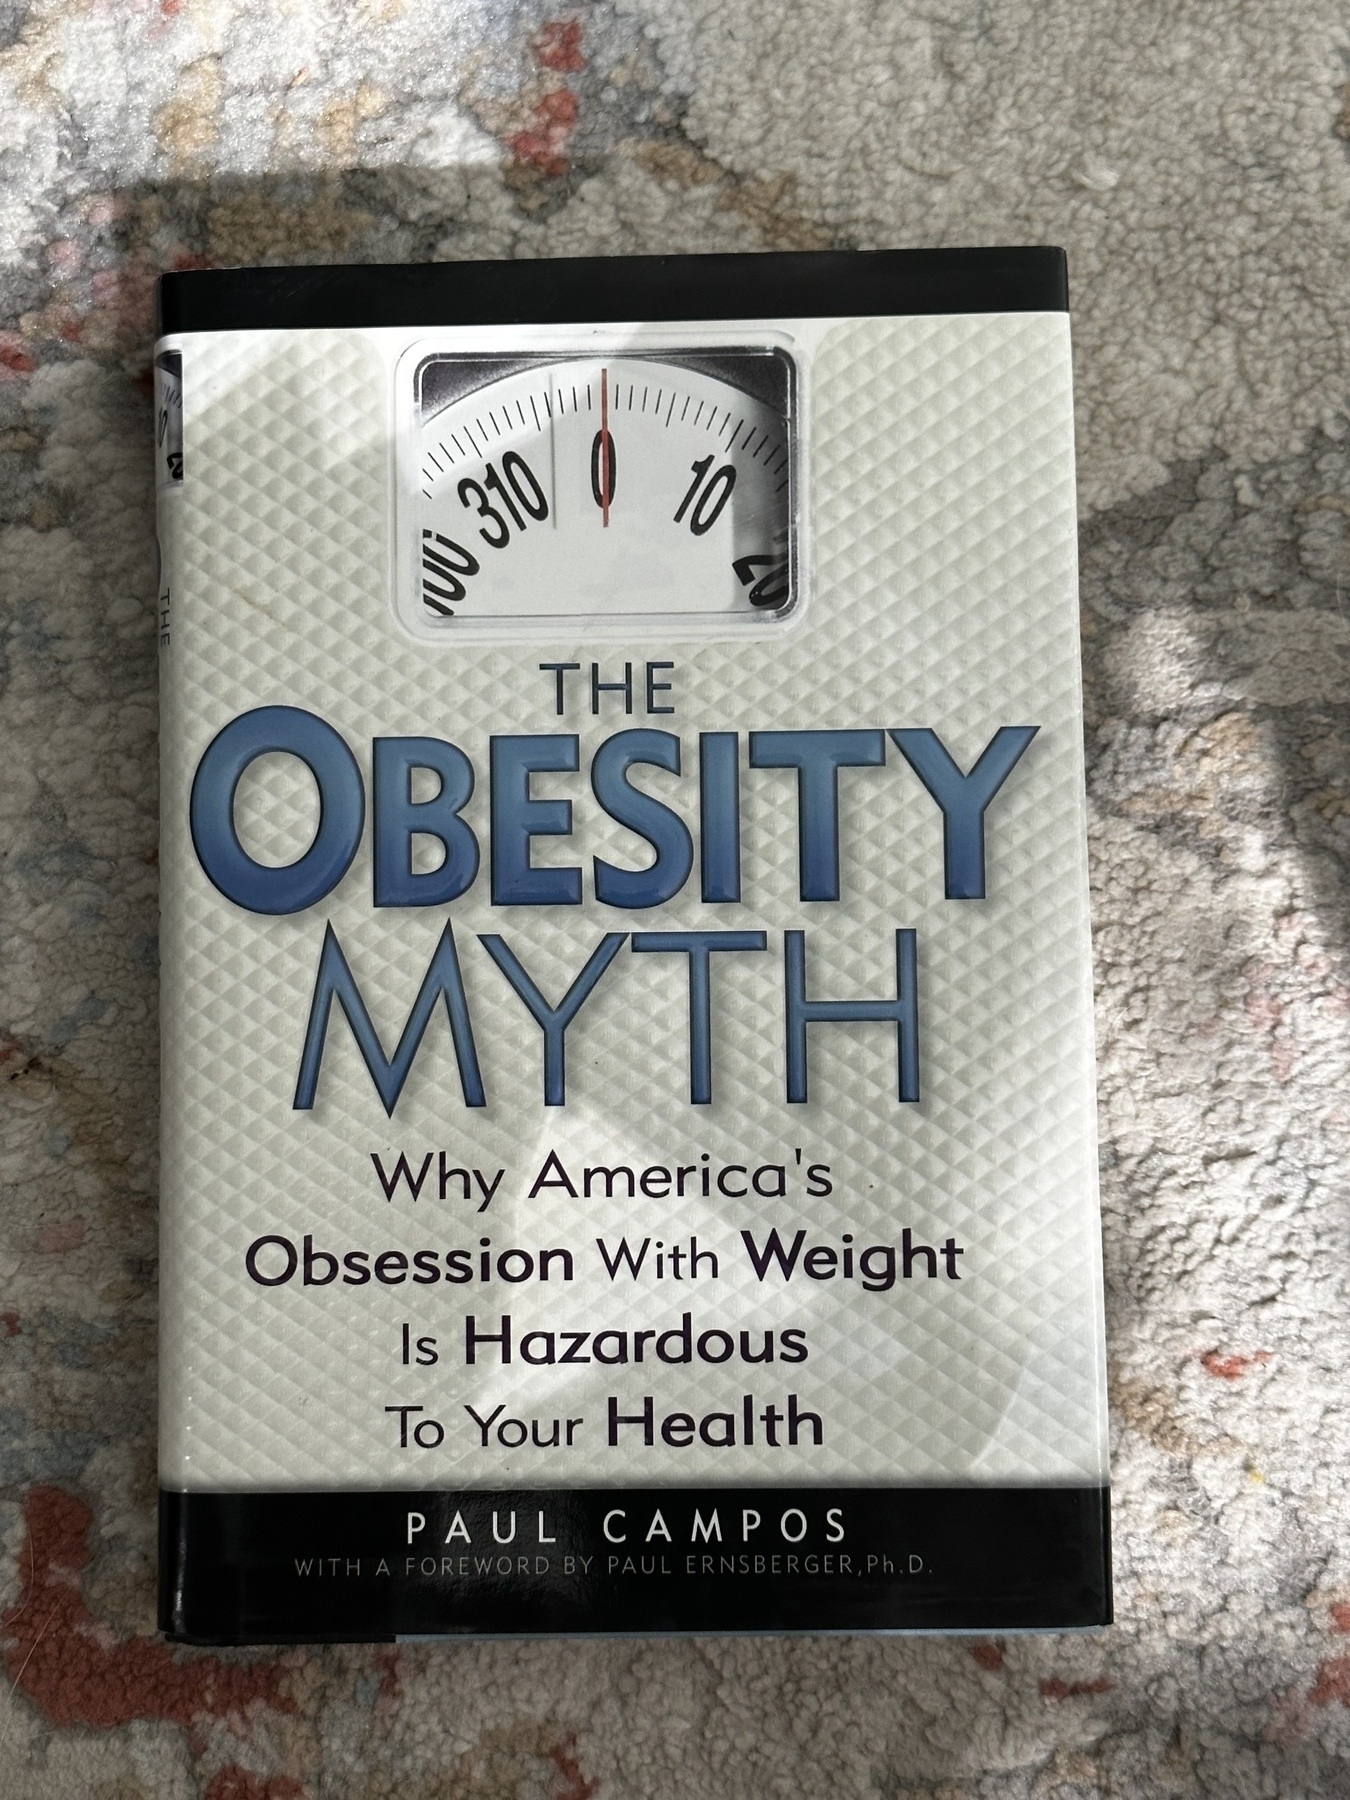 The Obesity Myth, a book by Paul Campos